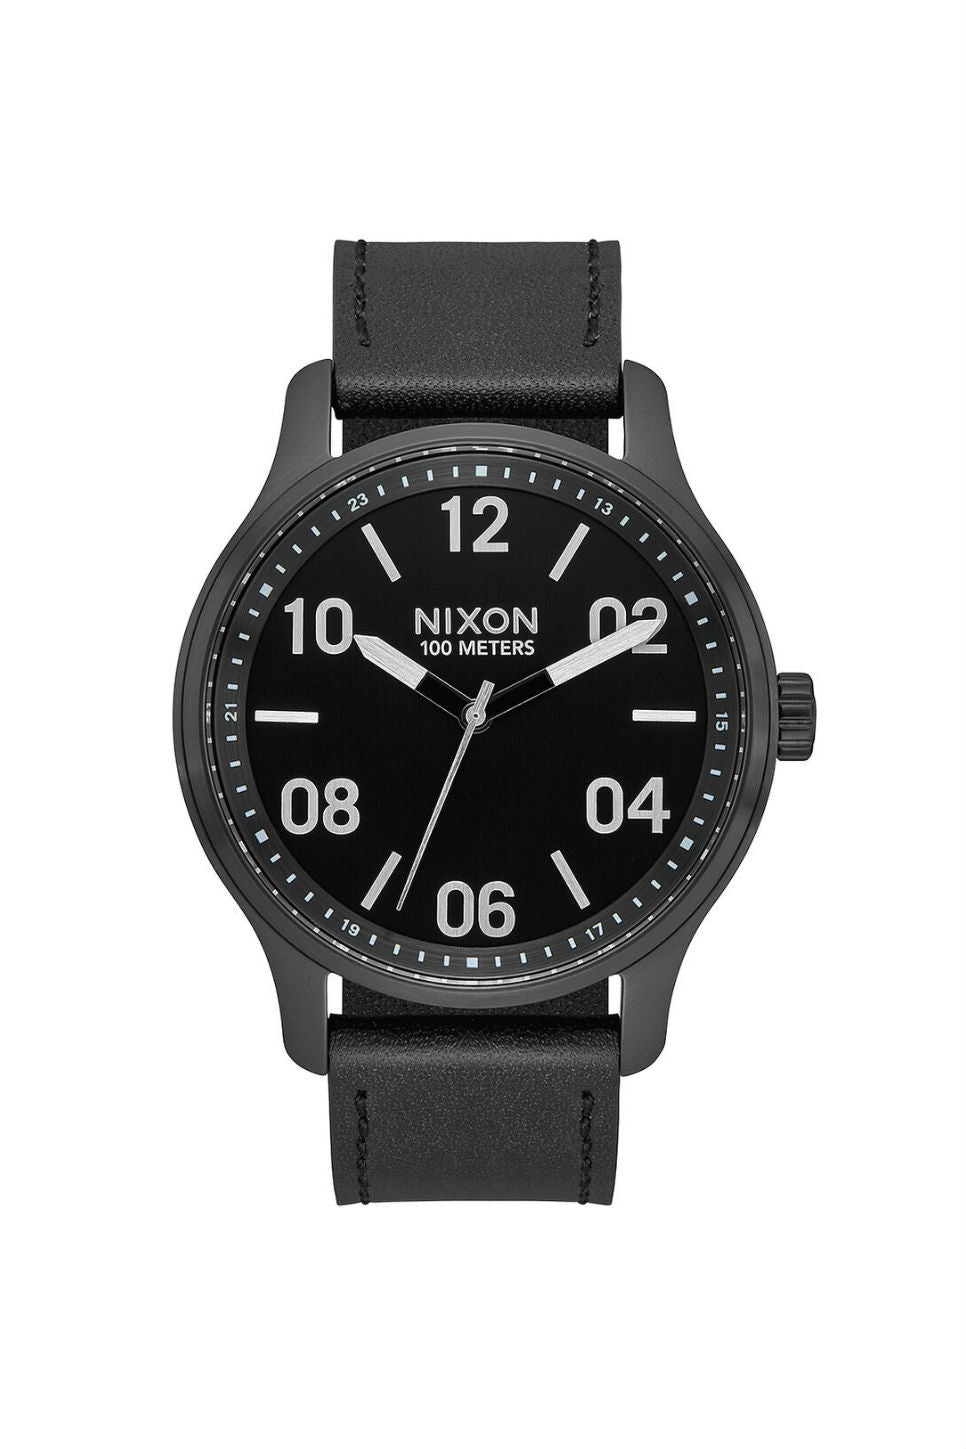 Nixon - Patrol Leather Watch - Black/Silver/Black - Front